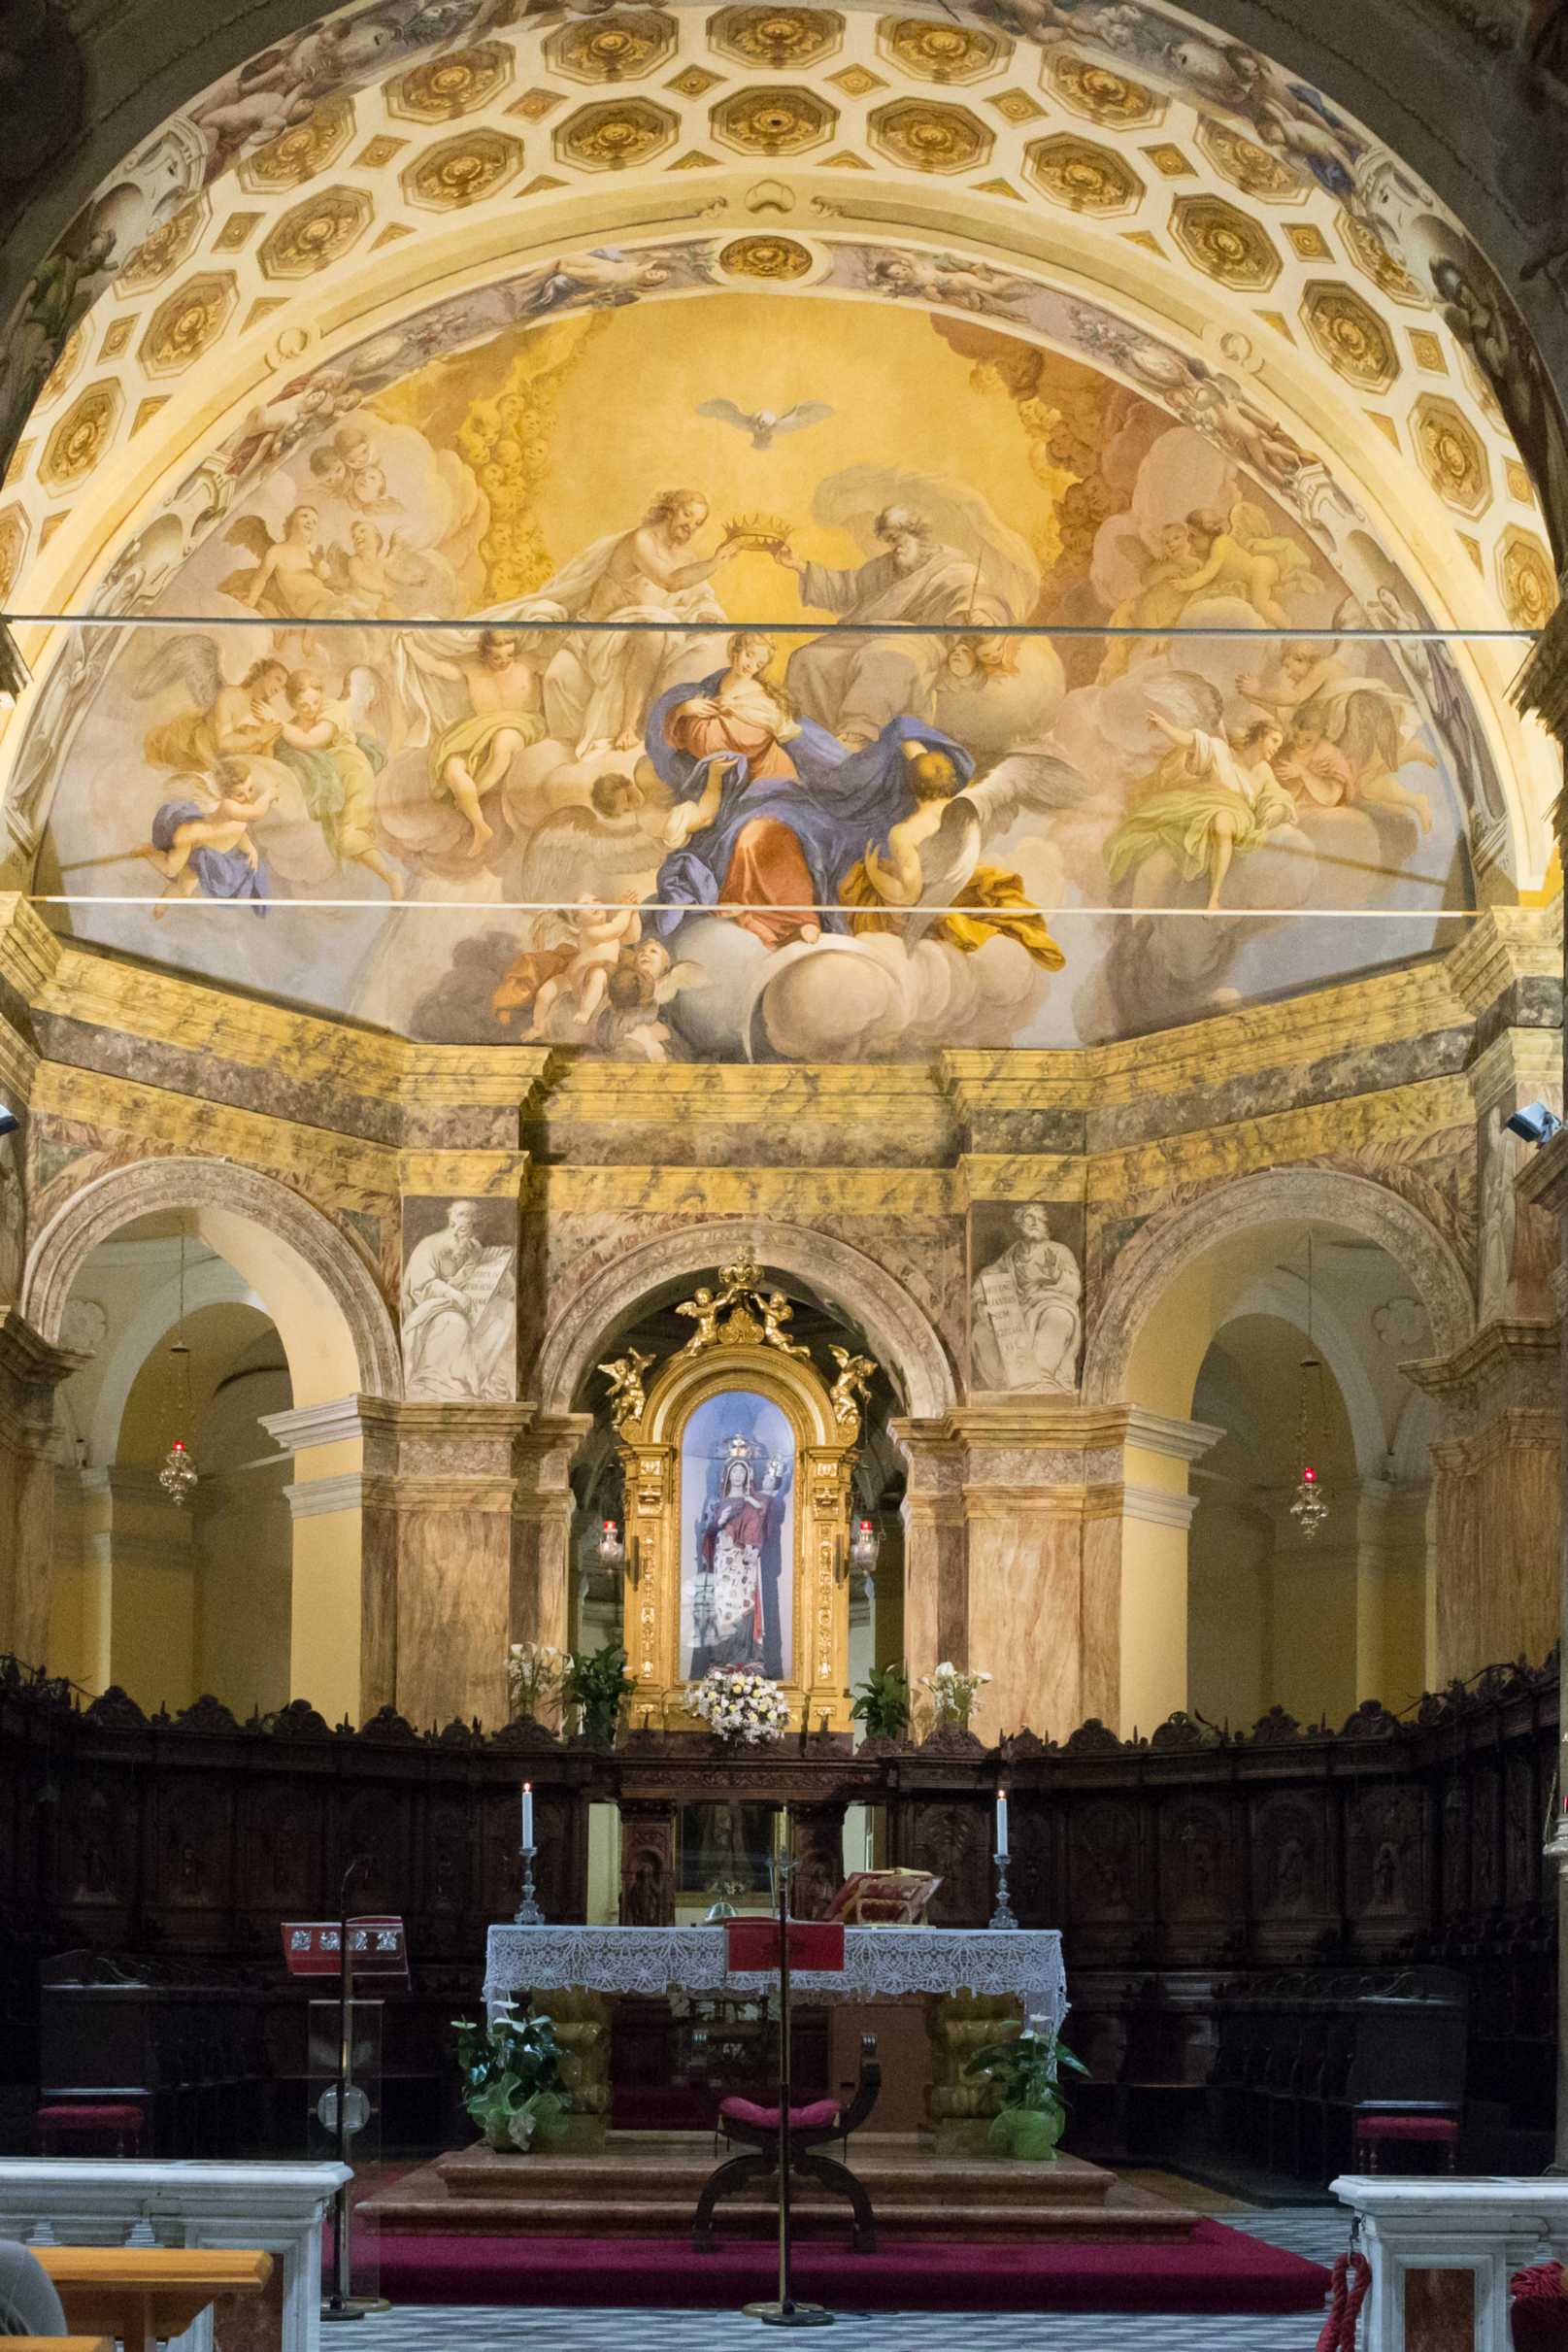 foto: https://upload.wikimedia.org/wikipedia/commons/1/1d/Altare_Basilica.jpg